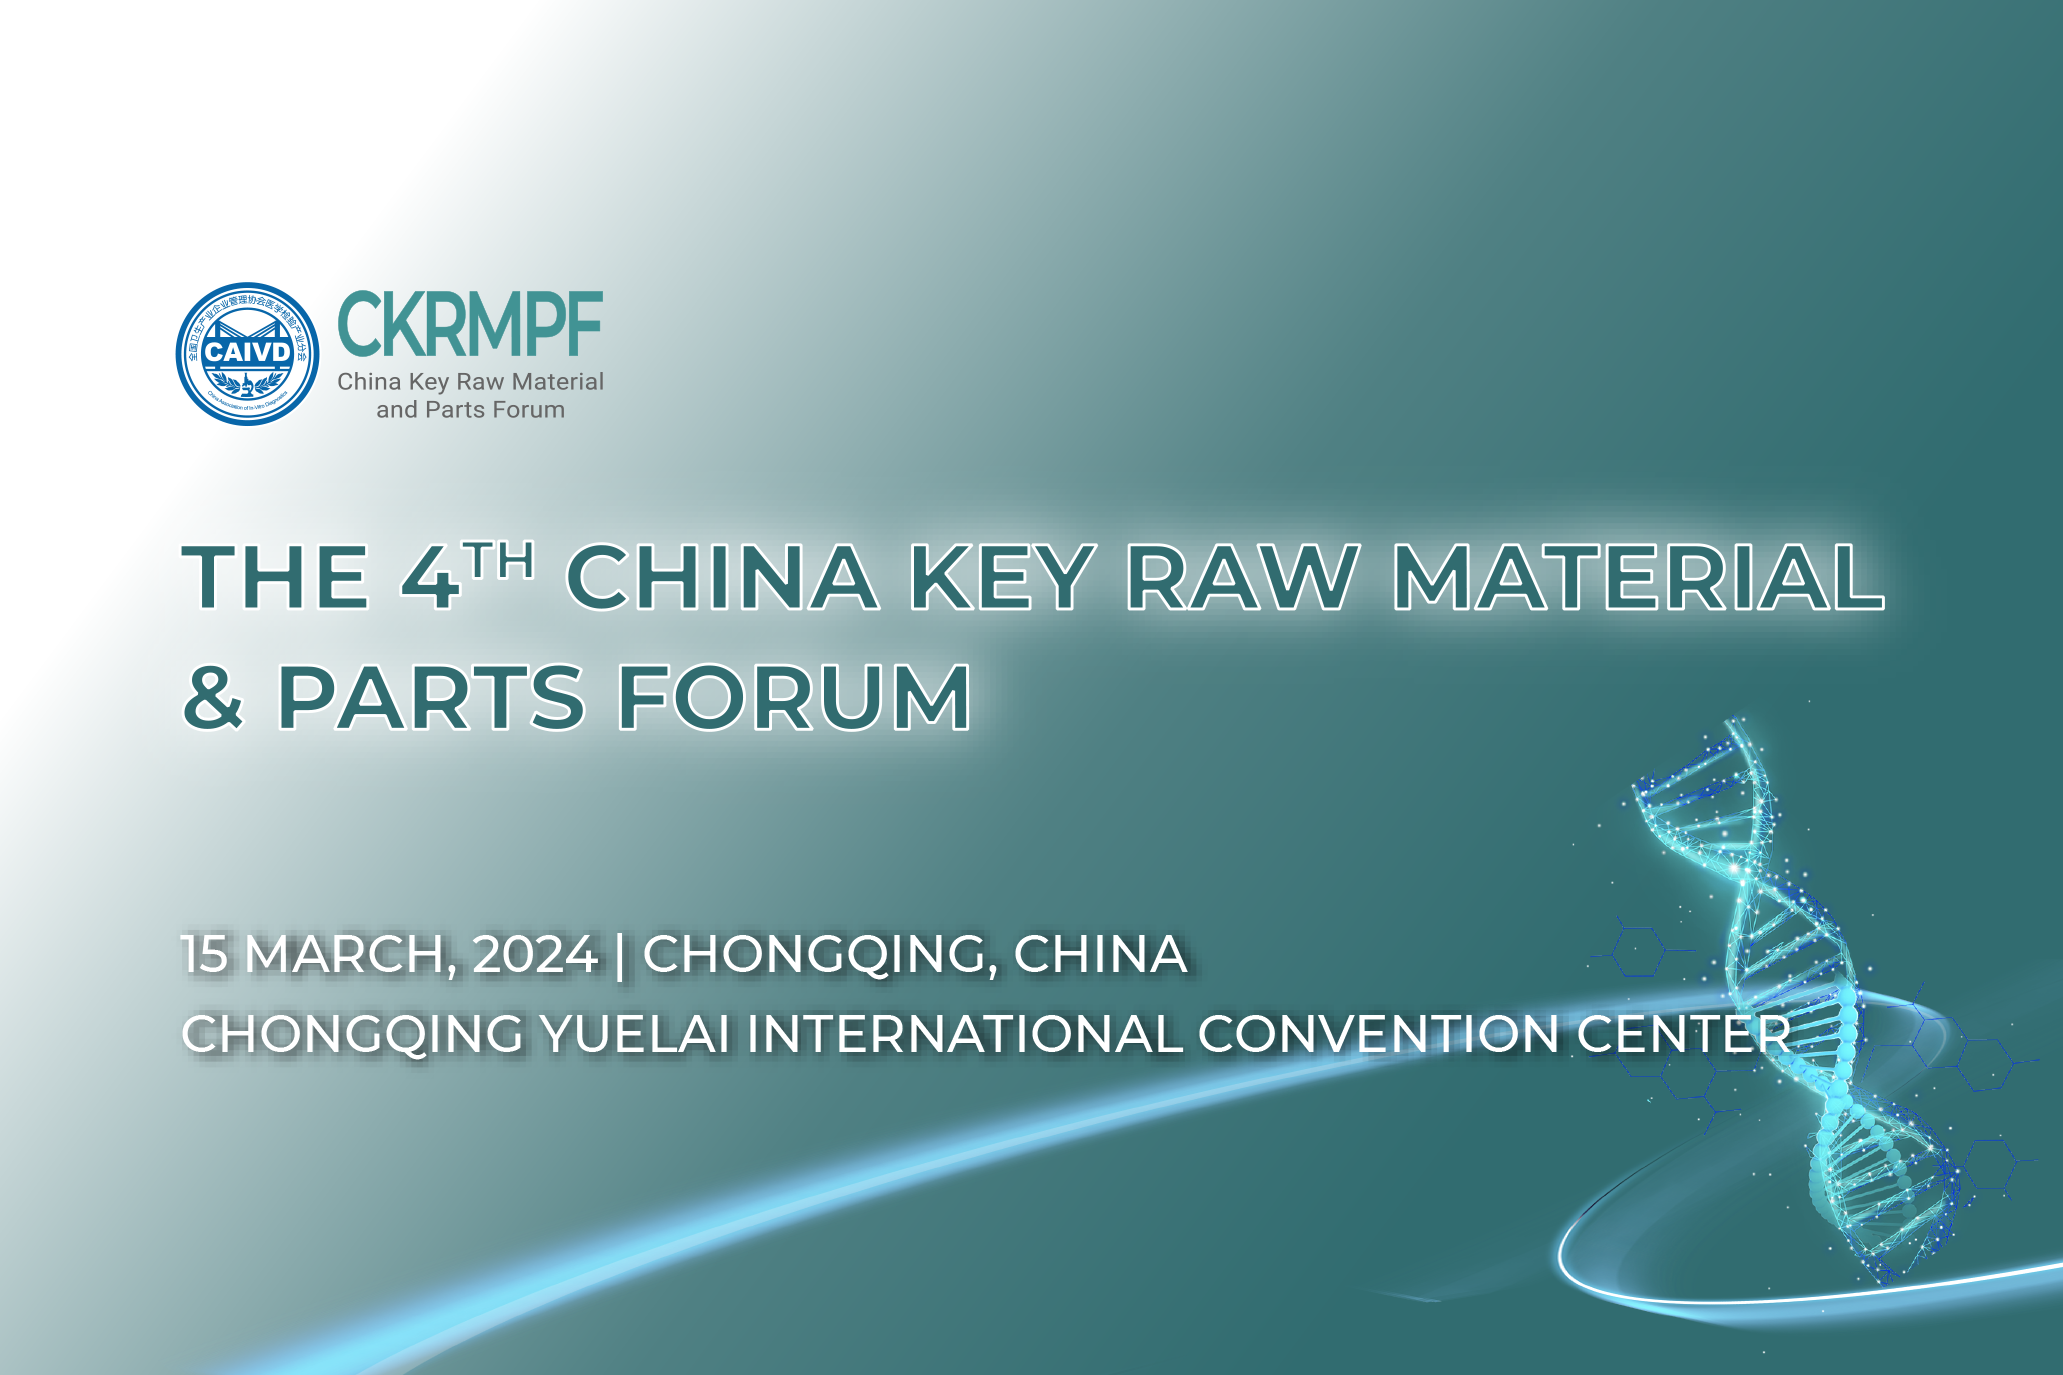 The 4th China Key Raw Material & Parts Forum (CKRMPF)